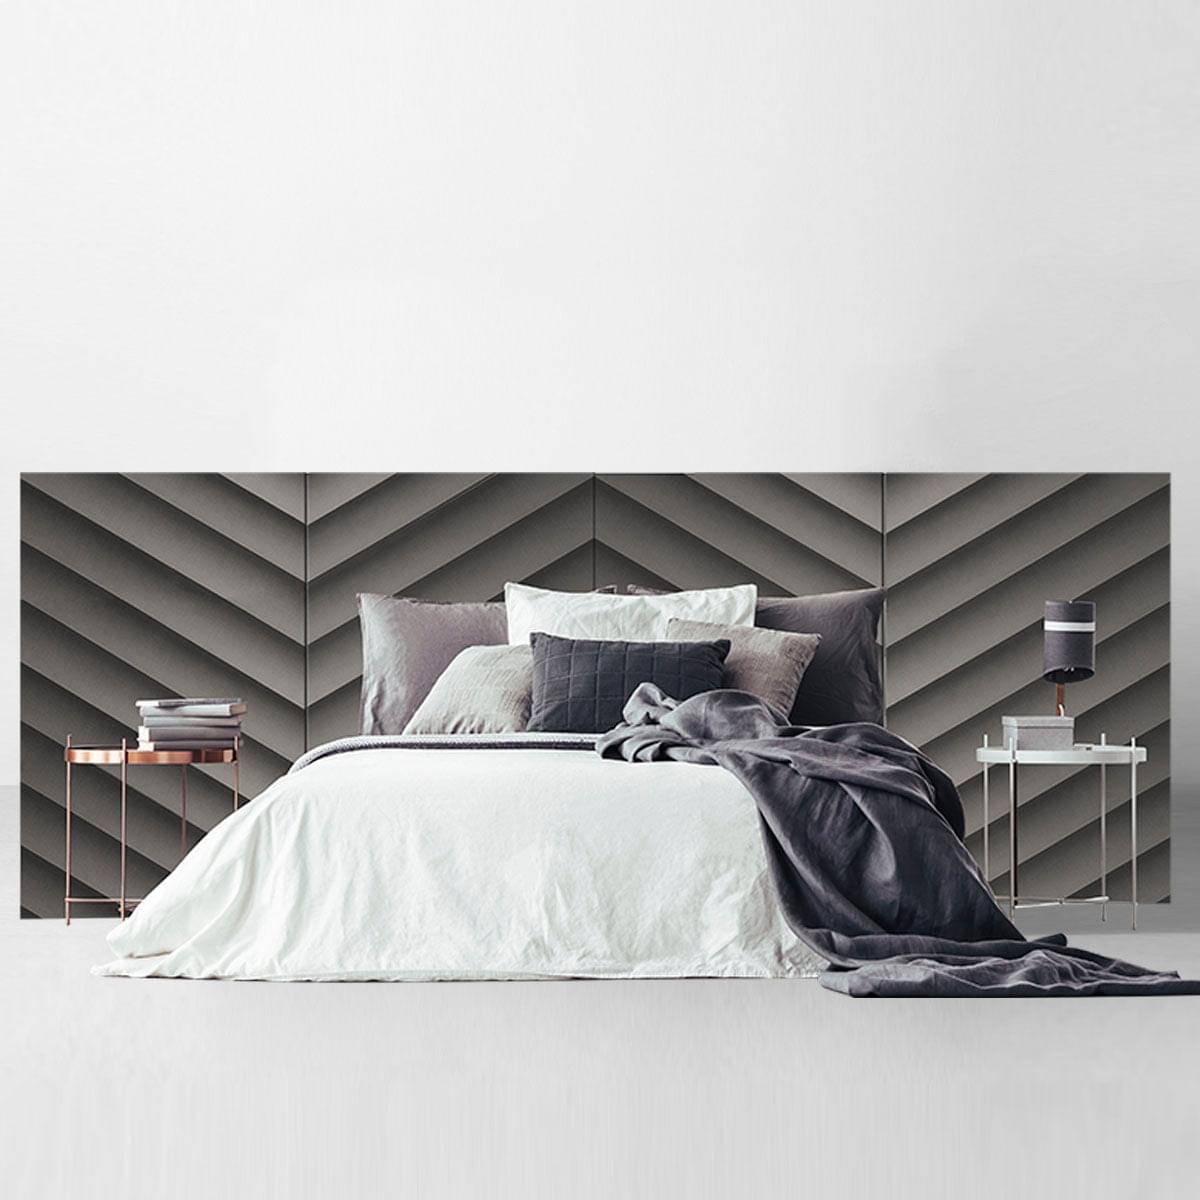 Chevron Artboard - Nimbus Beds